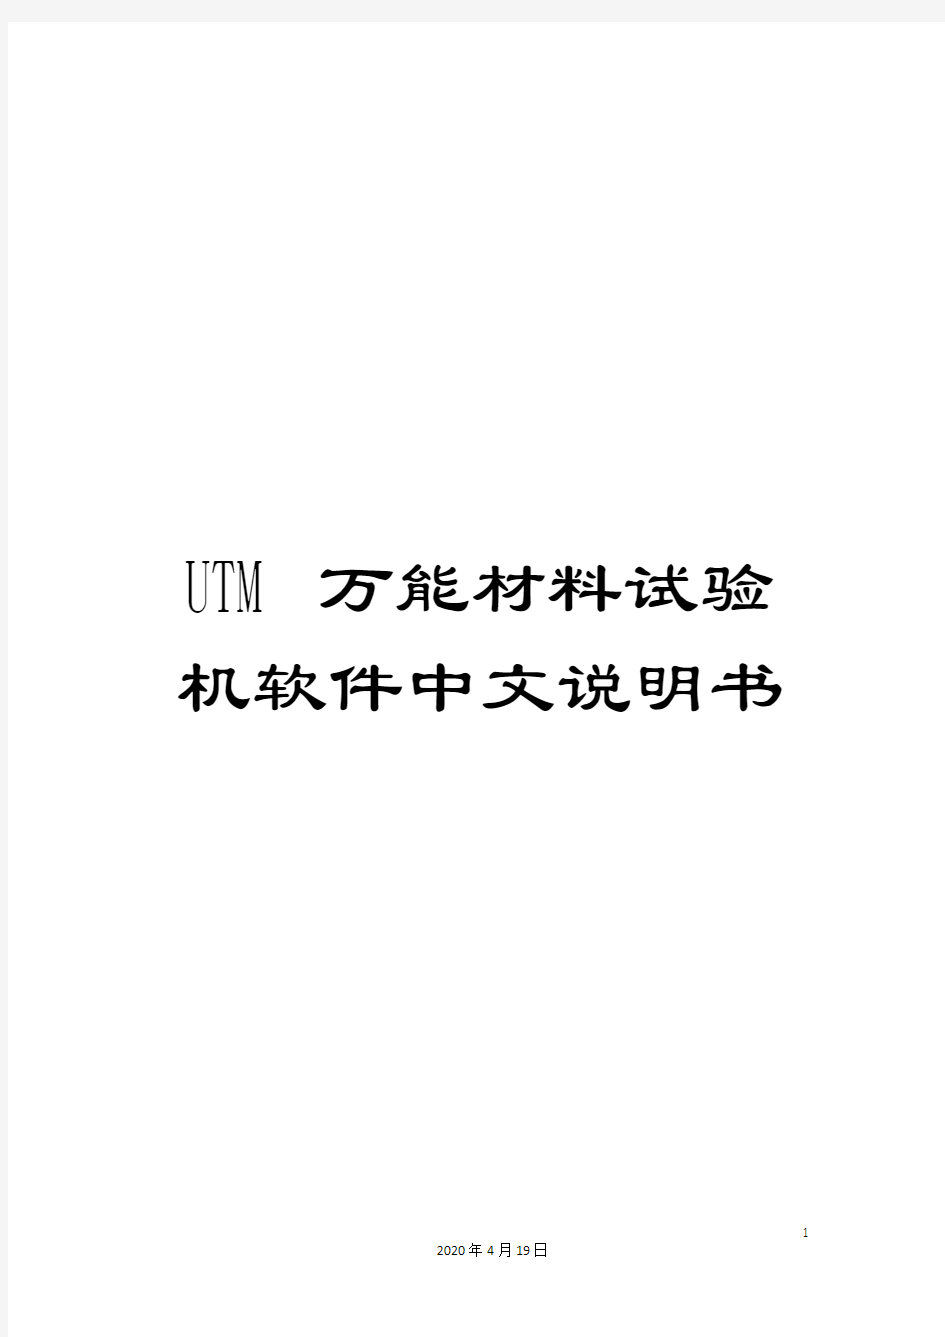 UTM万能材料试验机软件中文说明书